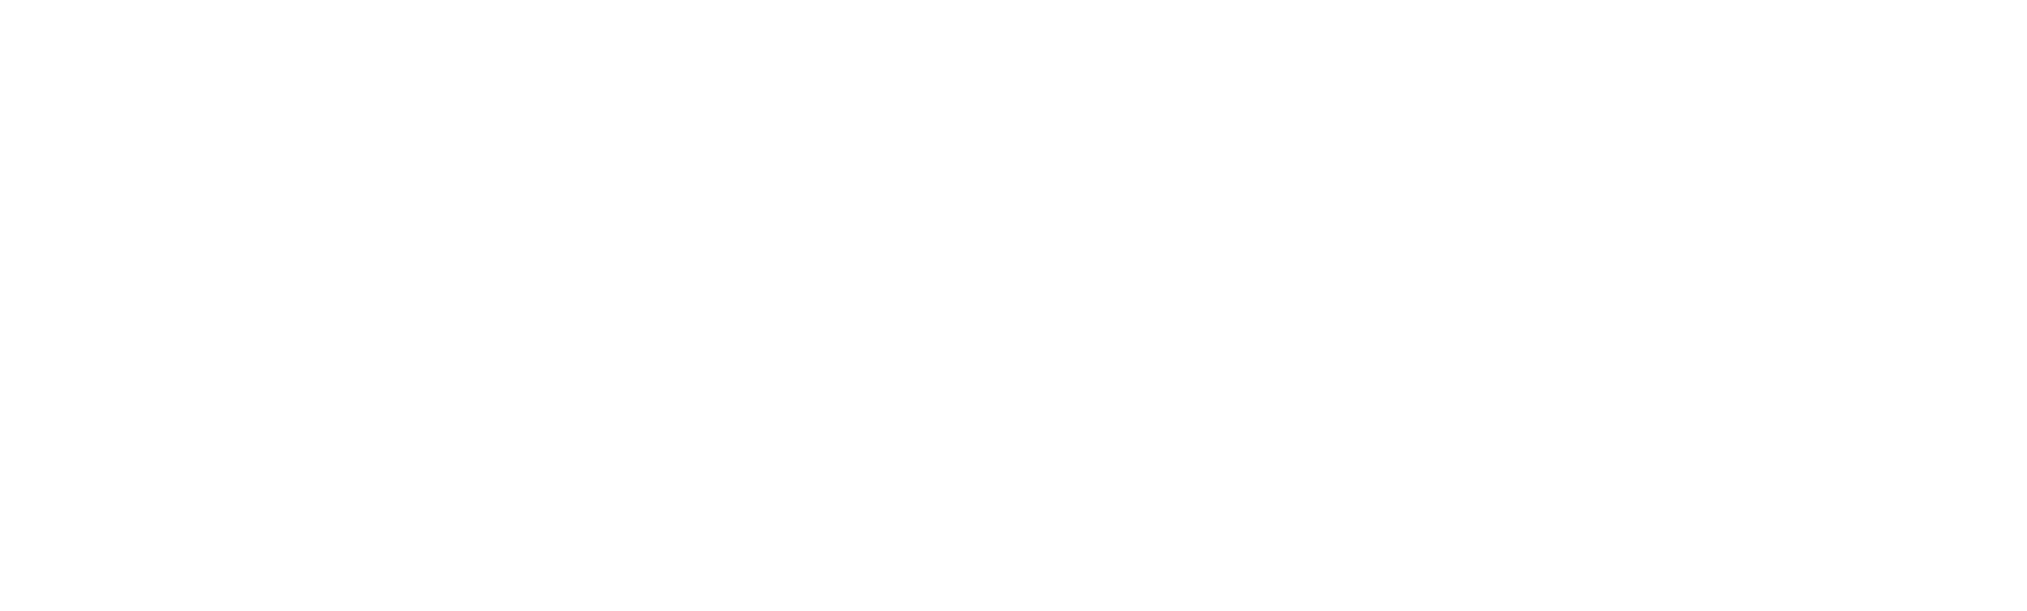 https://metaodo.com/wp-content/uploads/2019/03/Metaodo-01.png